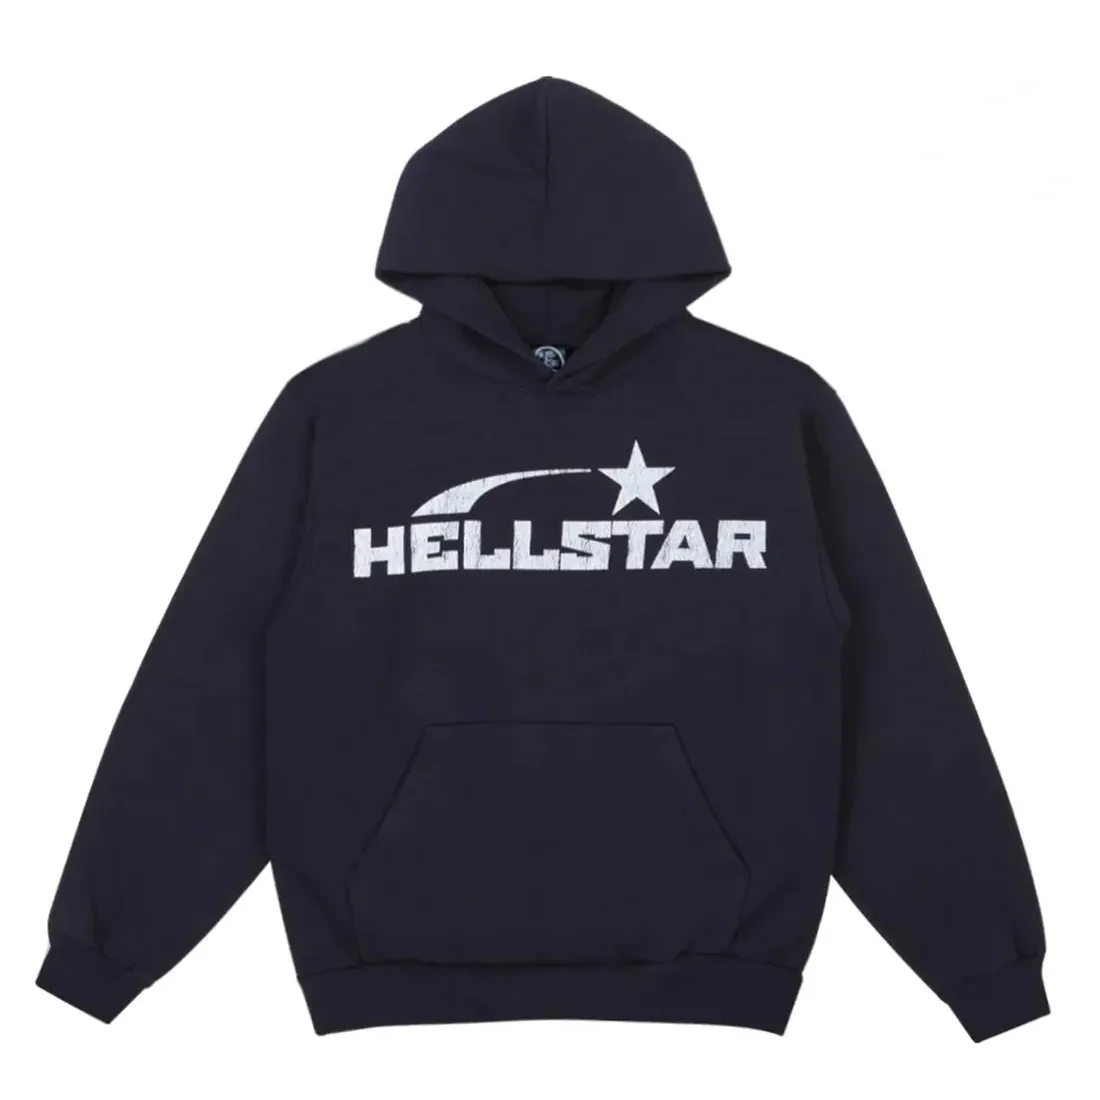 Hellstar Flame Sweatpants Grey